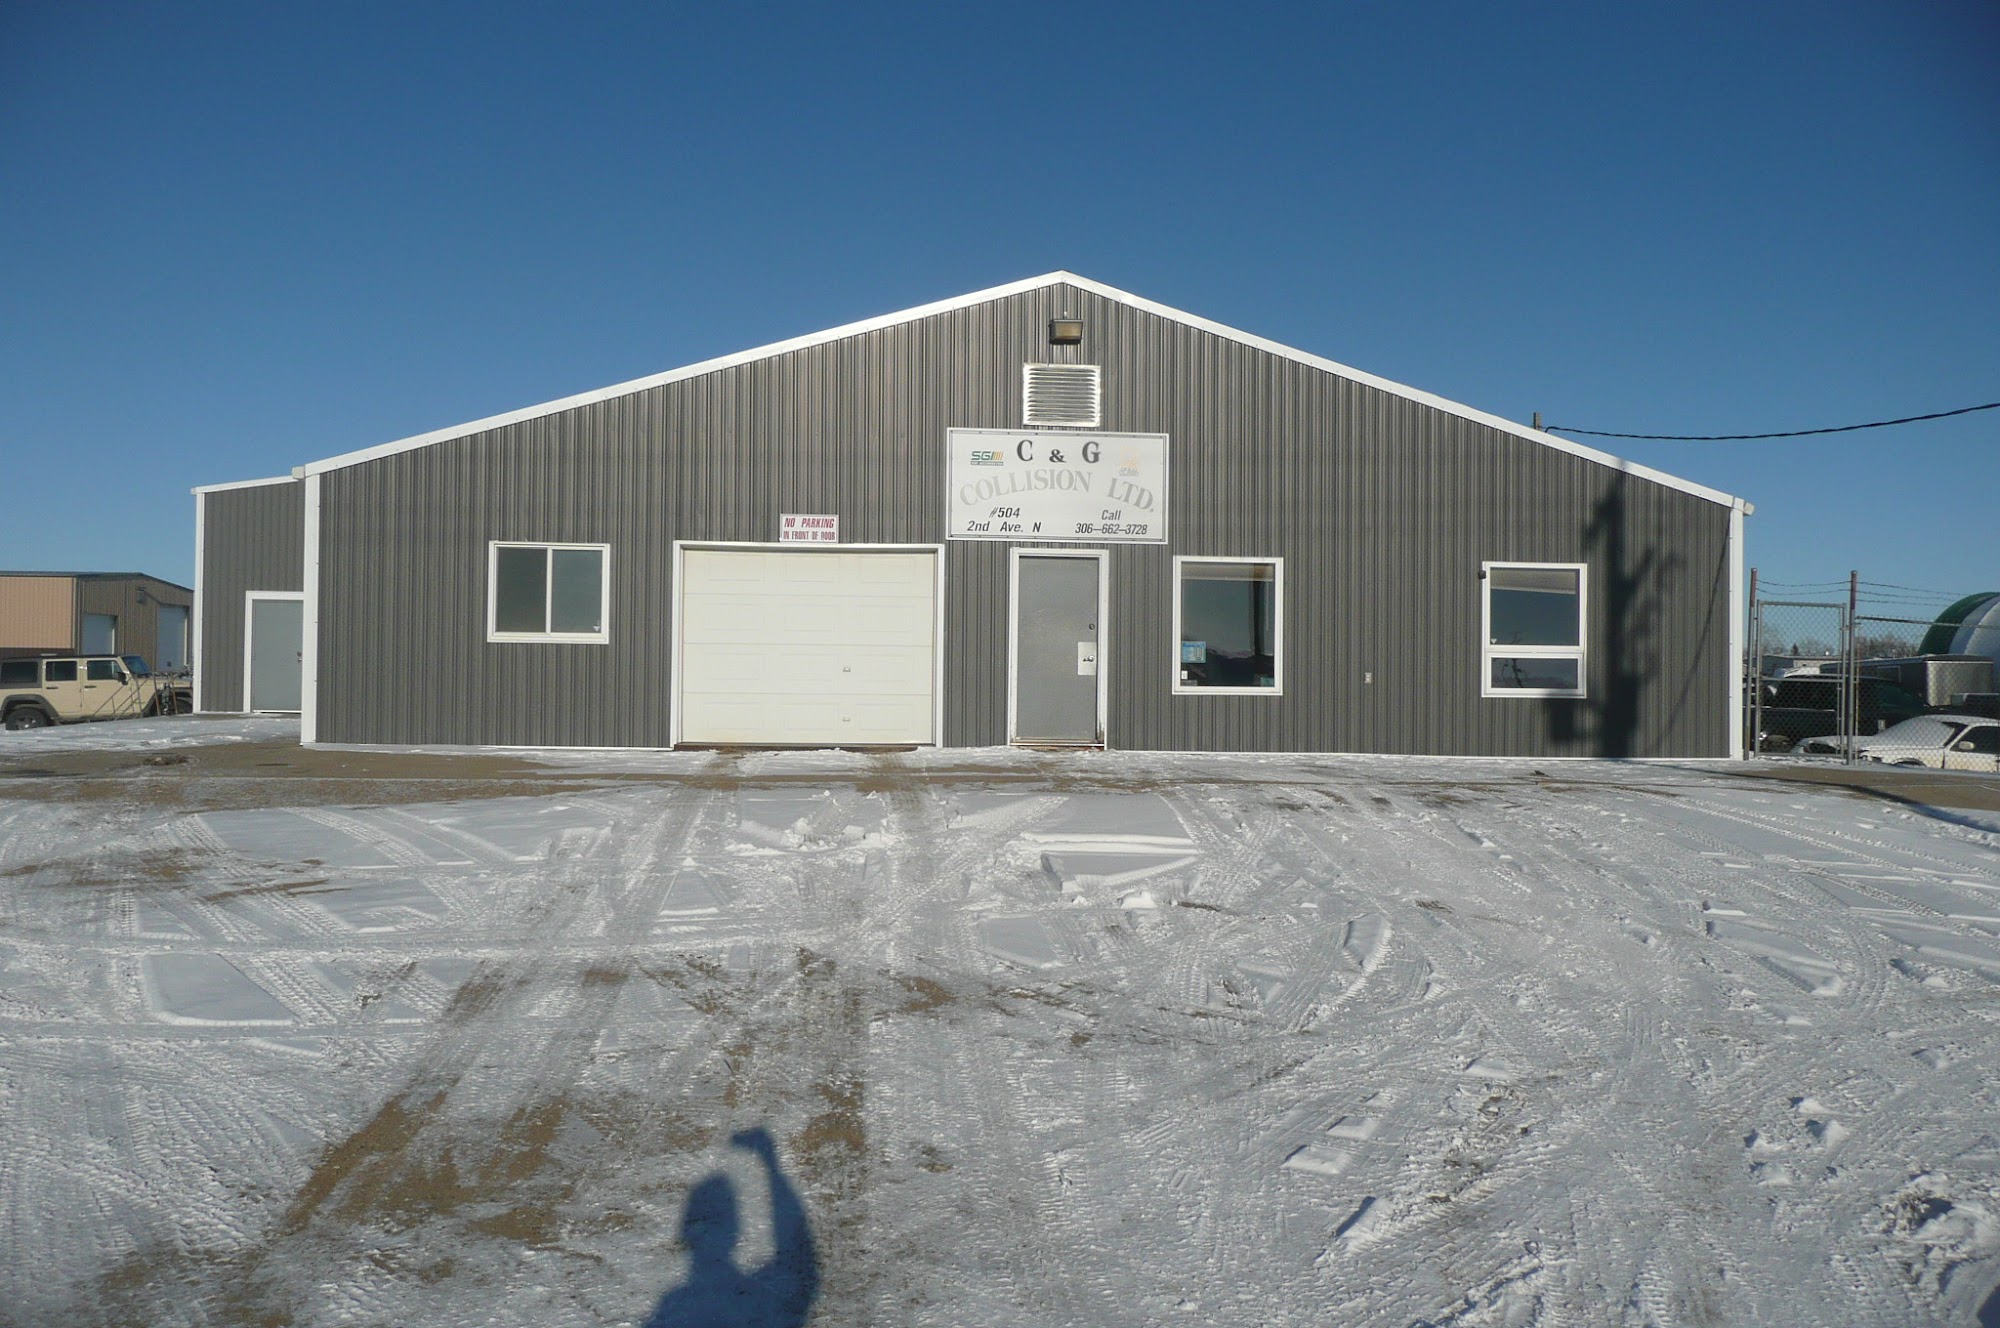 C&G Collision Ltd. 504 2 Ave N, Maple Creek Saskatchewan S0N 1N0